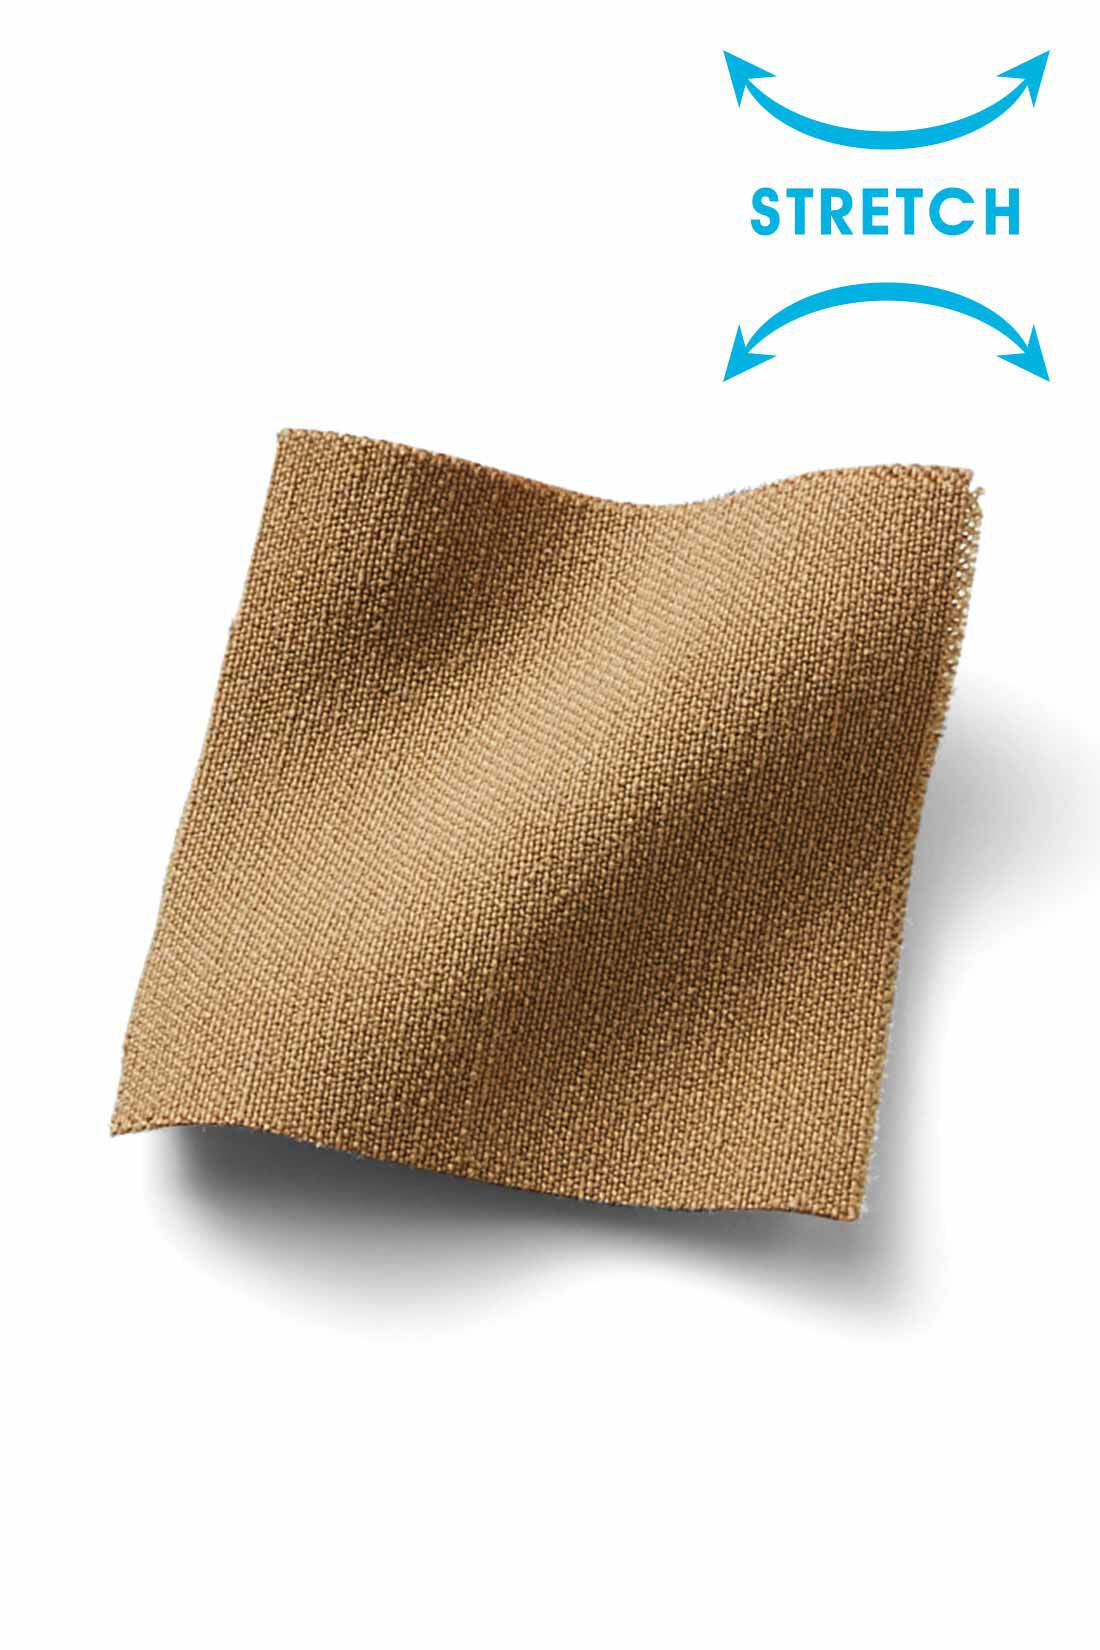 IEDIT[イディット]　ウエストメッシュで快適 ストレッチ布はく素材の美脚レギンスパンツ〈ブラック〉|カットソーみたいなはき心地ながら、きちんと見えもかなう布はく素材。